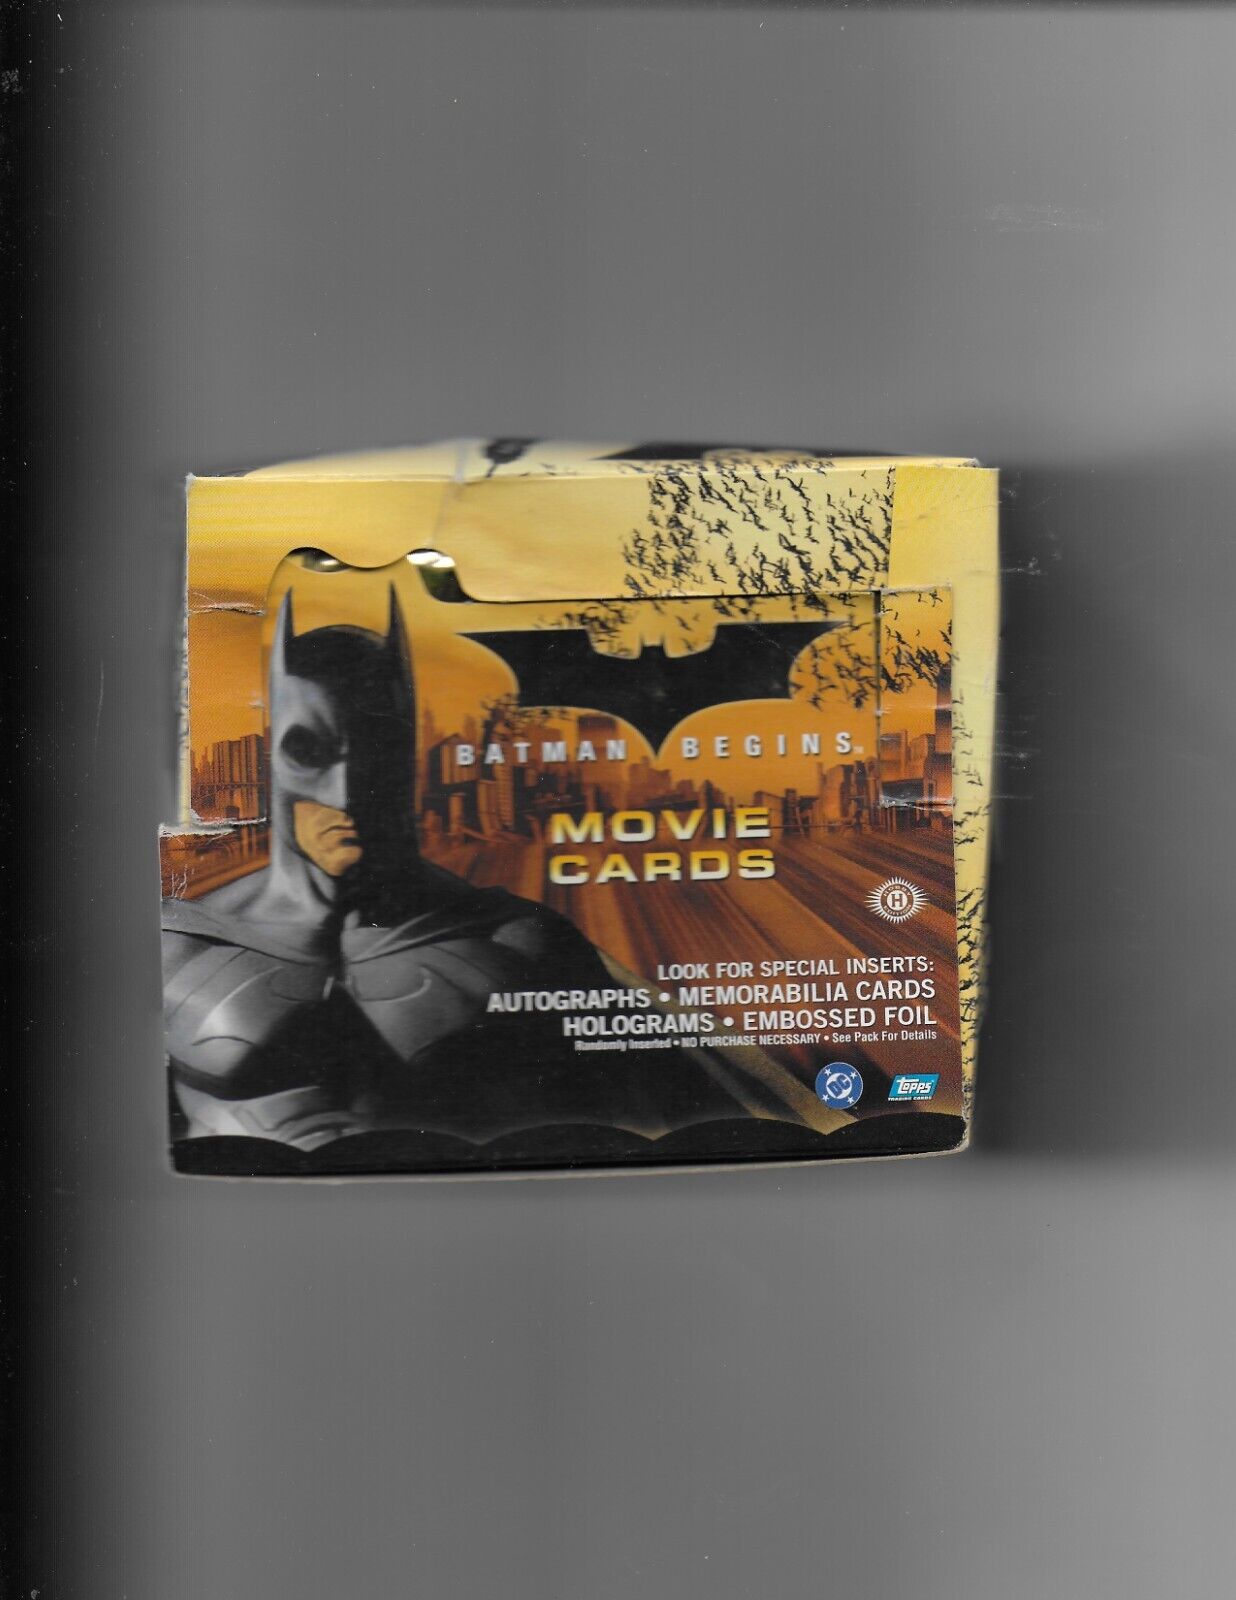 2005 Topps Batman Begins Movie Cards  opened box  9 packs /7 cards per